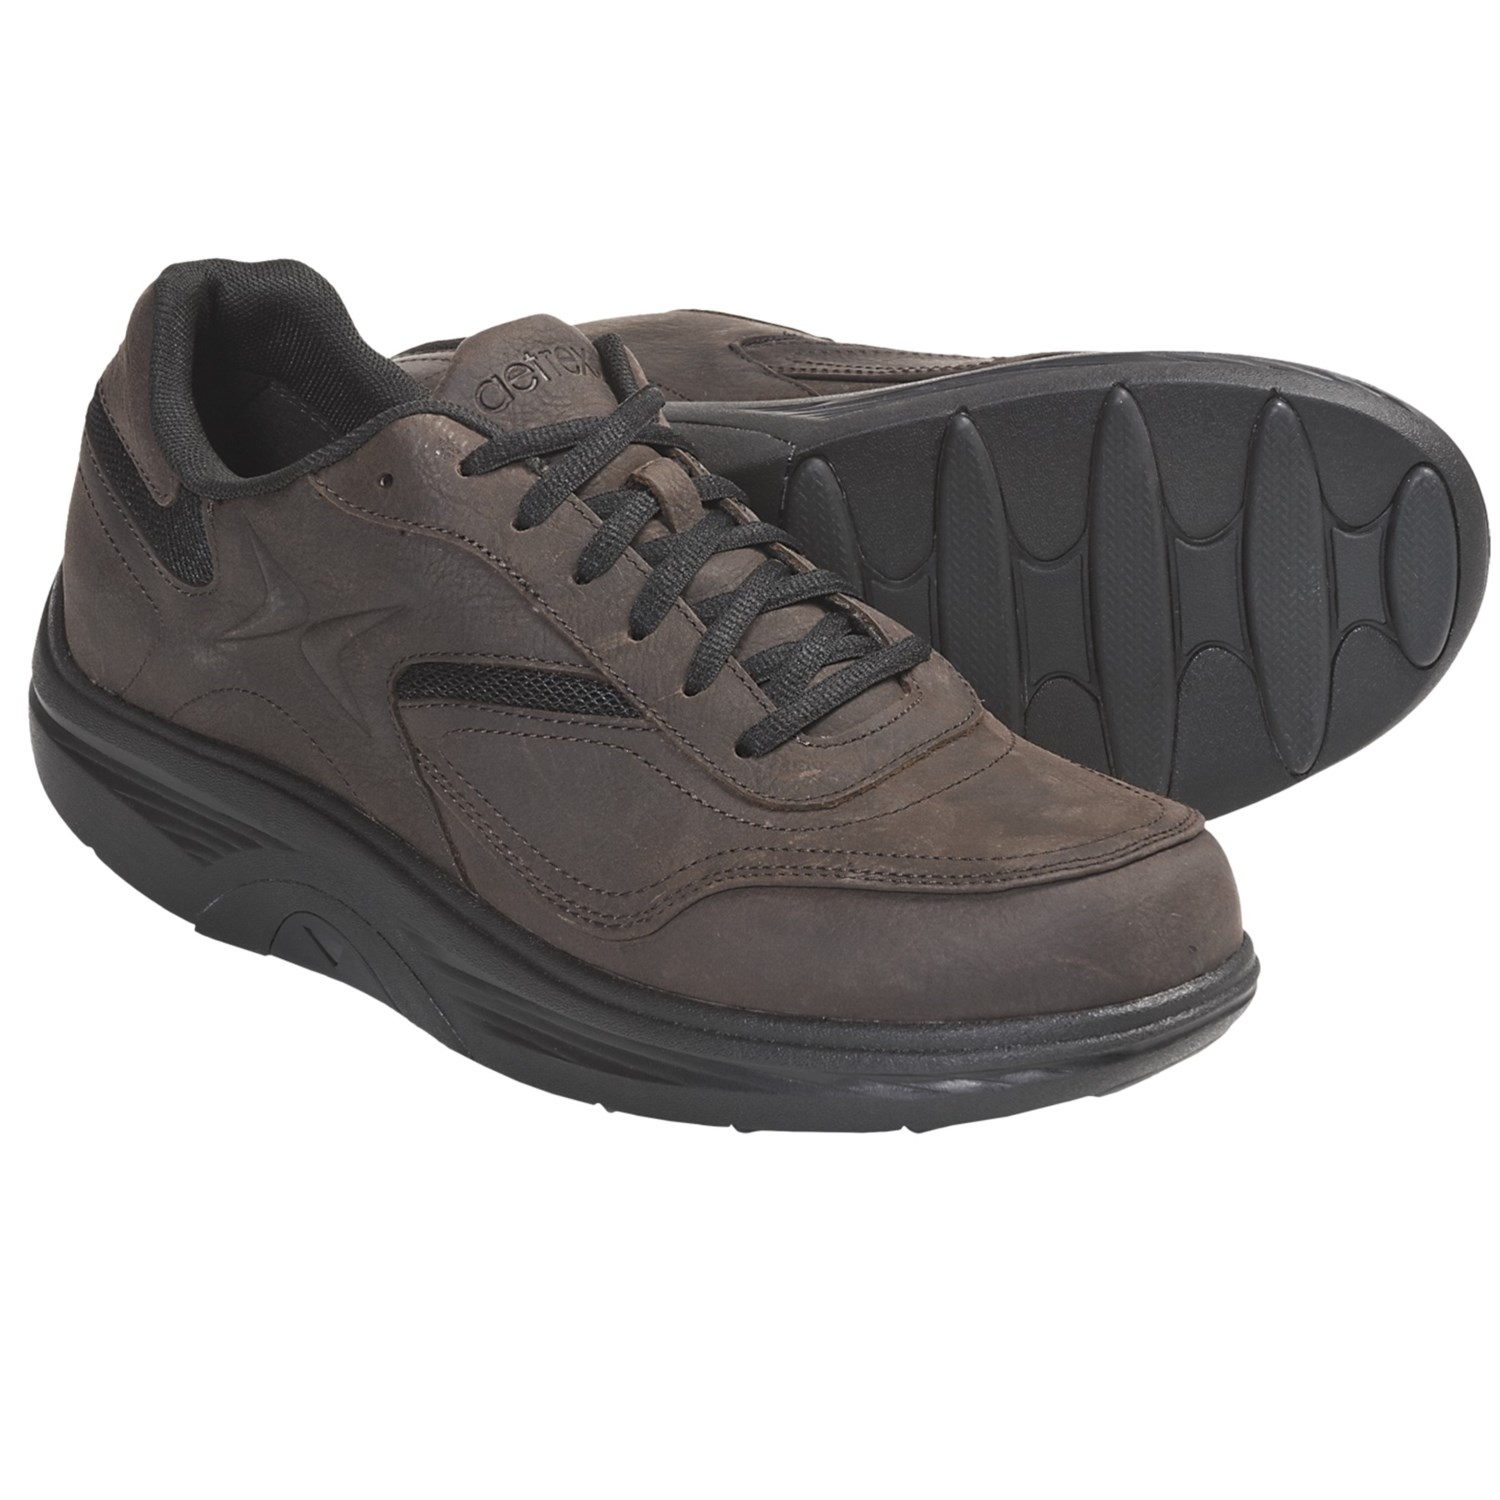 Aetrex Bodyworks Sport Shoes (For Men) 5642H - Save 76%